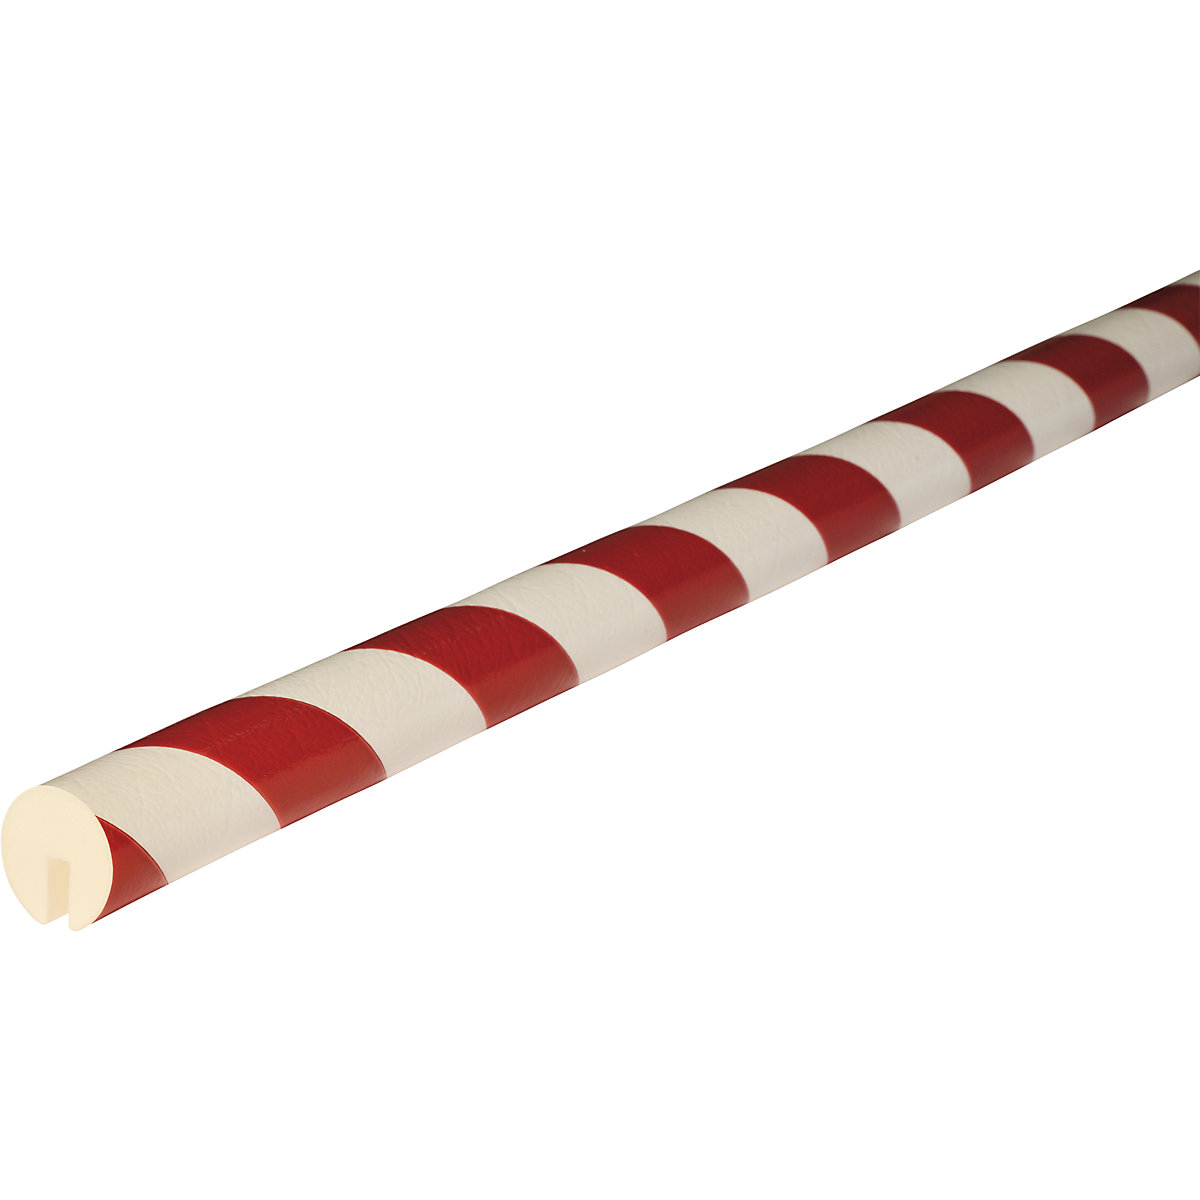 Knuffi®-randbescherming – SHG, type B, stuk van 1 m, rood/wit-22